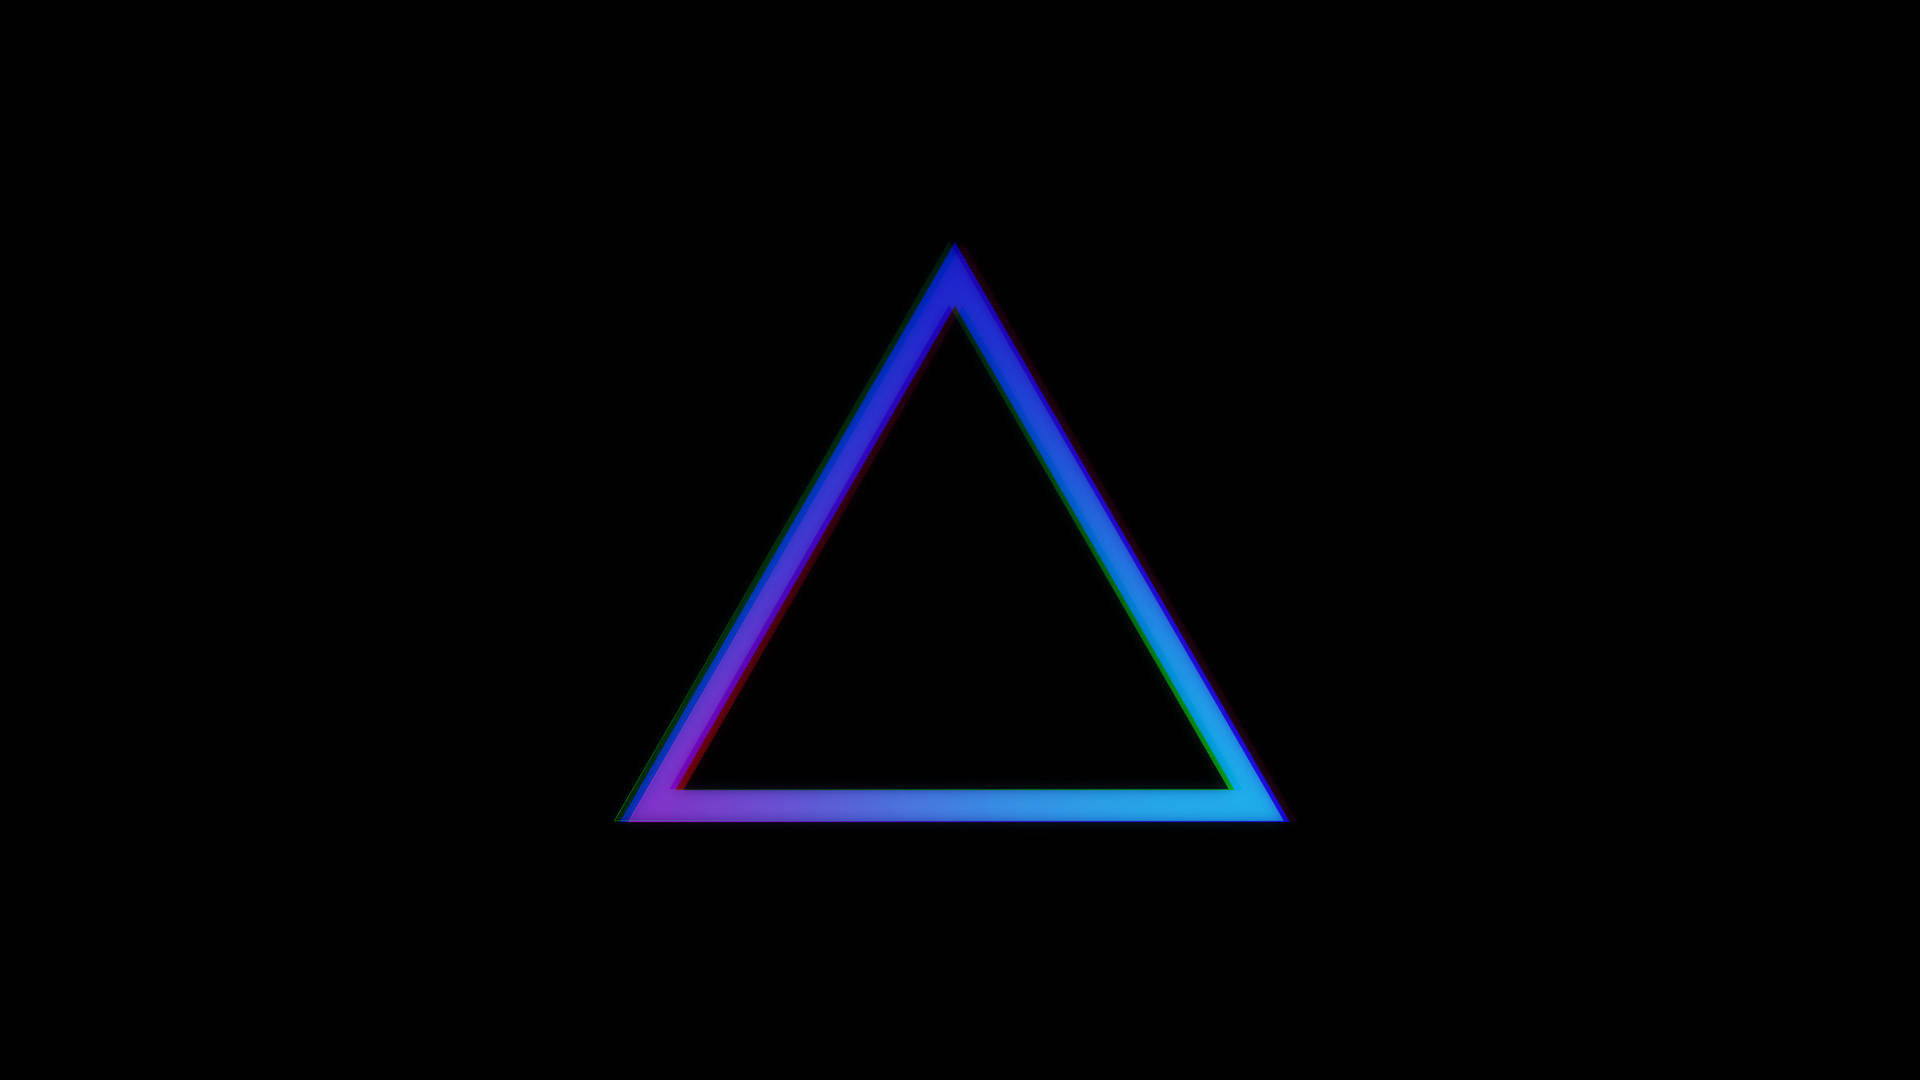 Triánguloequilátero Azul Minimalista. Fondo de pantalla